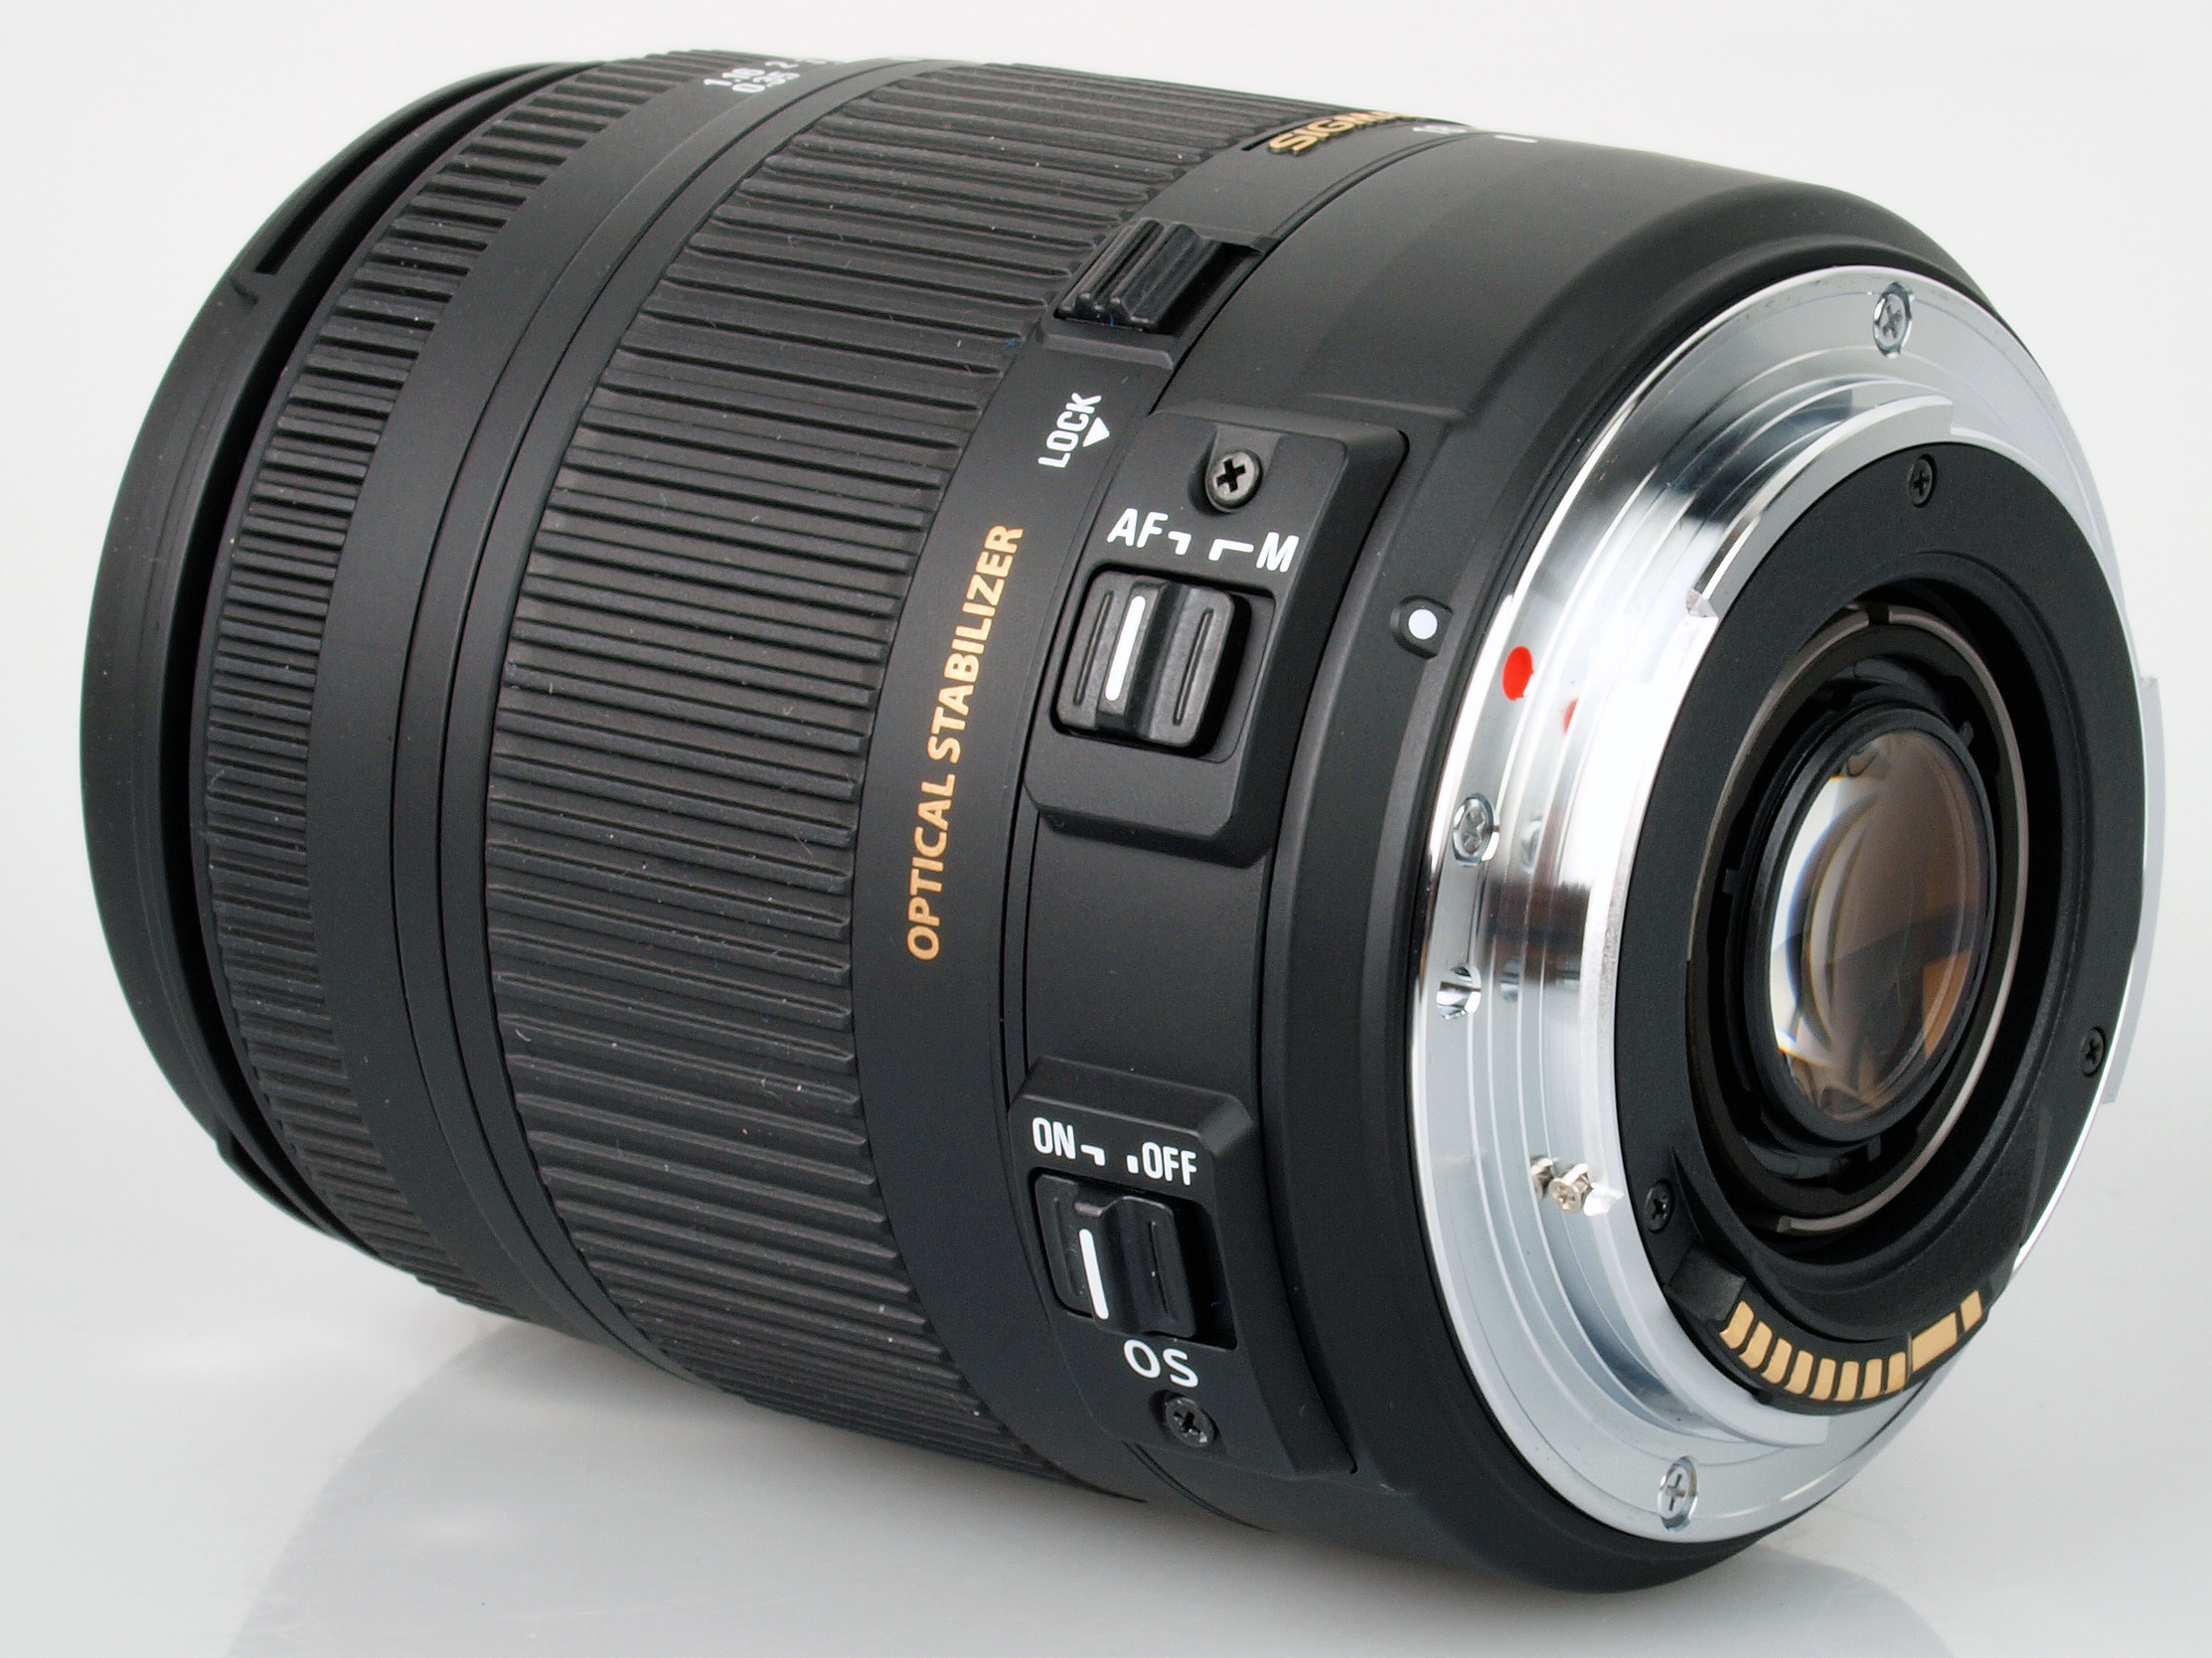 Sigma 18-250mm F3.5-6.3 DC MACRO OS HSM Lens for Nikon